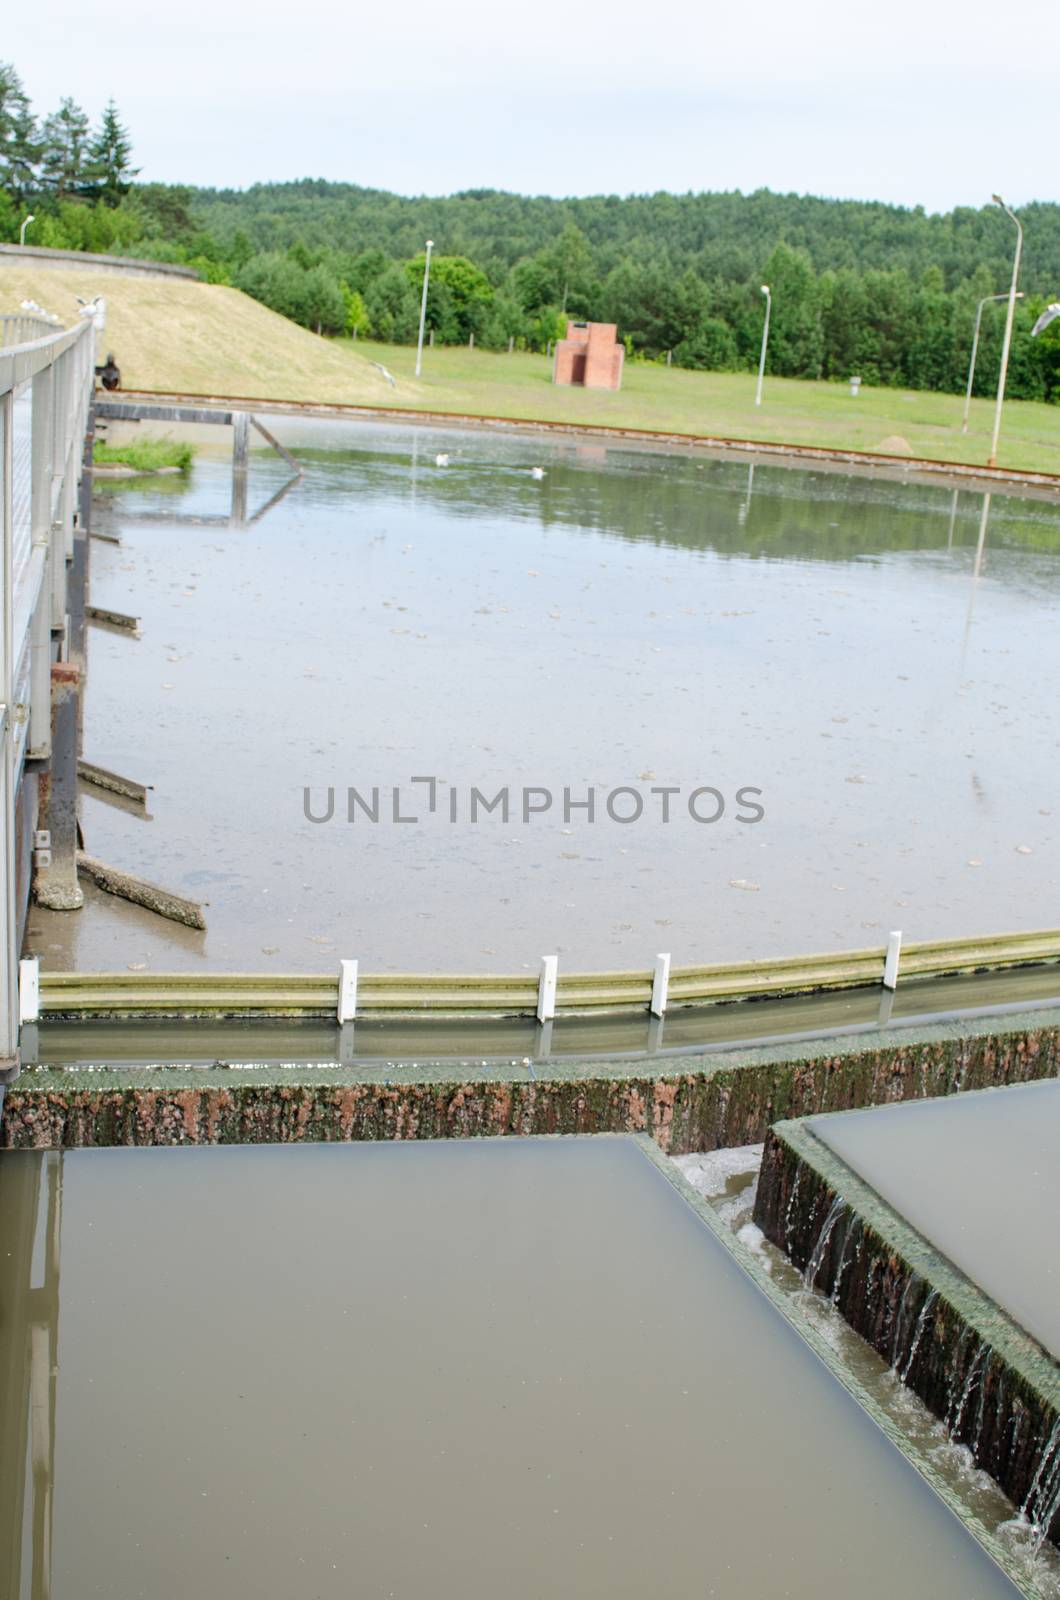 Primary sewage water clarification facility step by sauletas